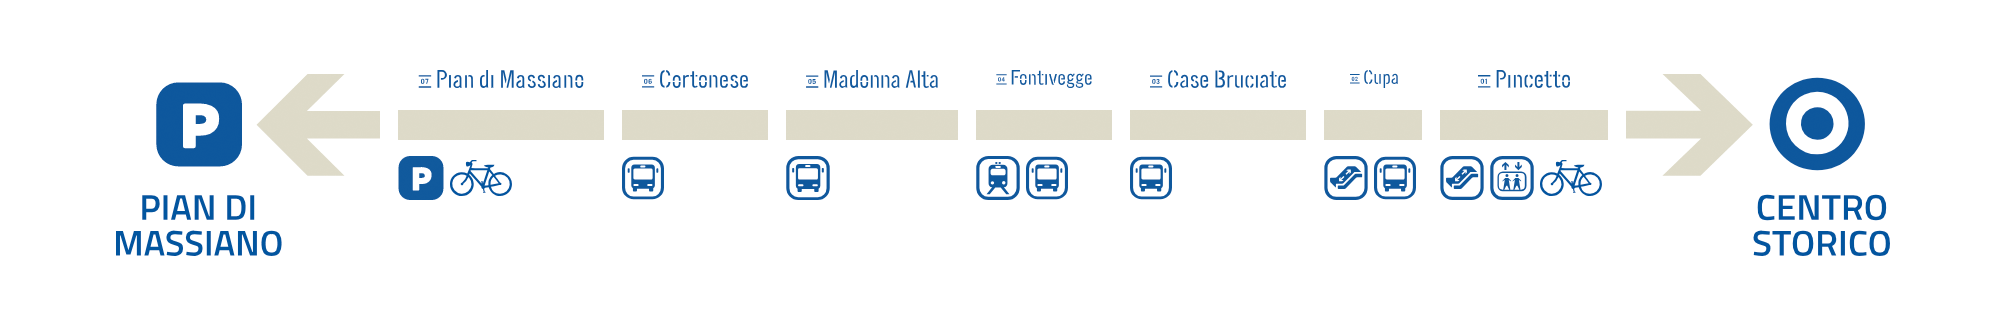 У мини-метро всего одна линия. Источник: Minimetrospa.it